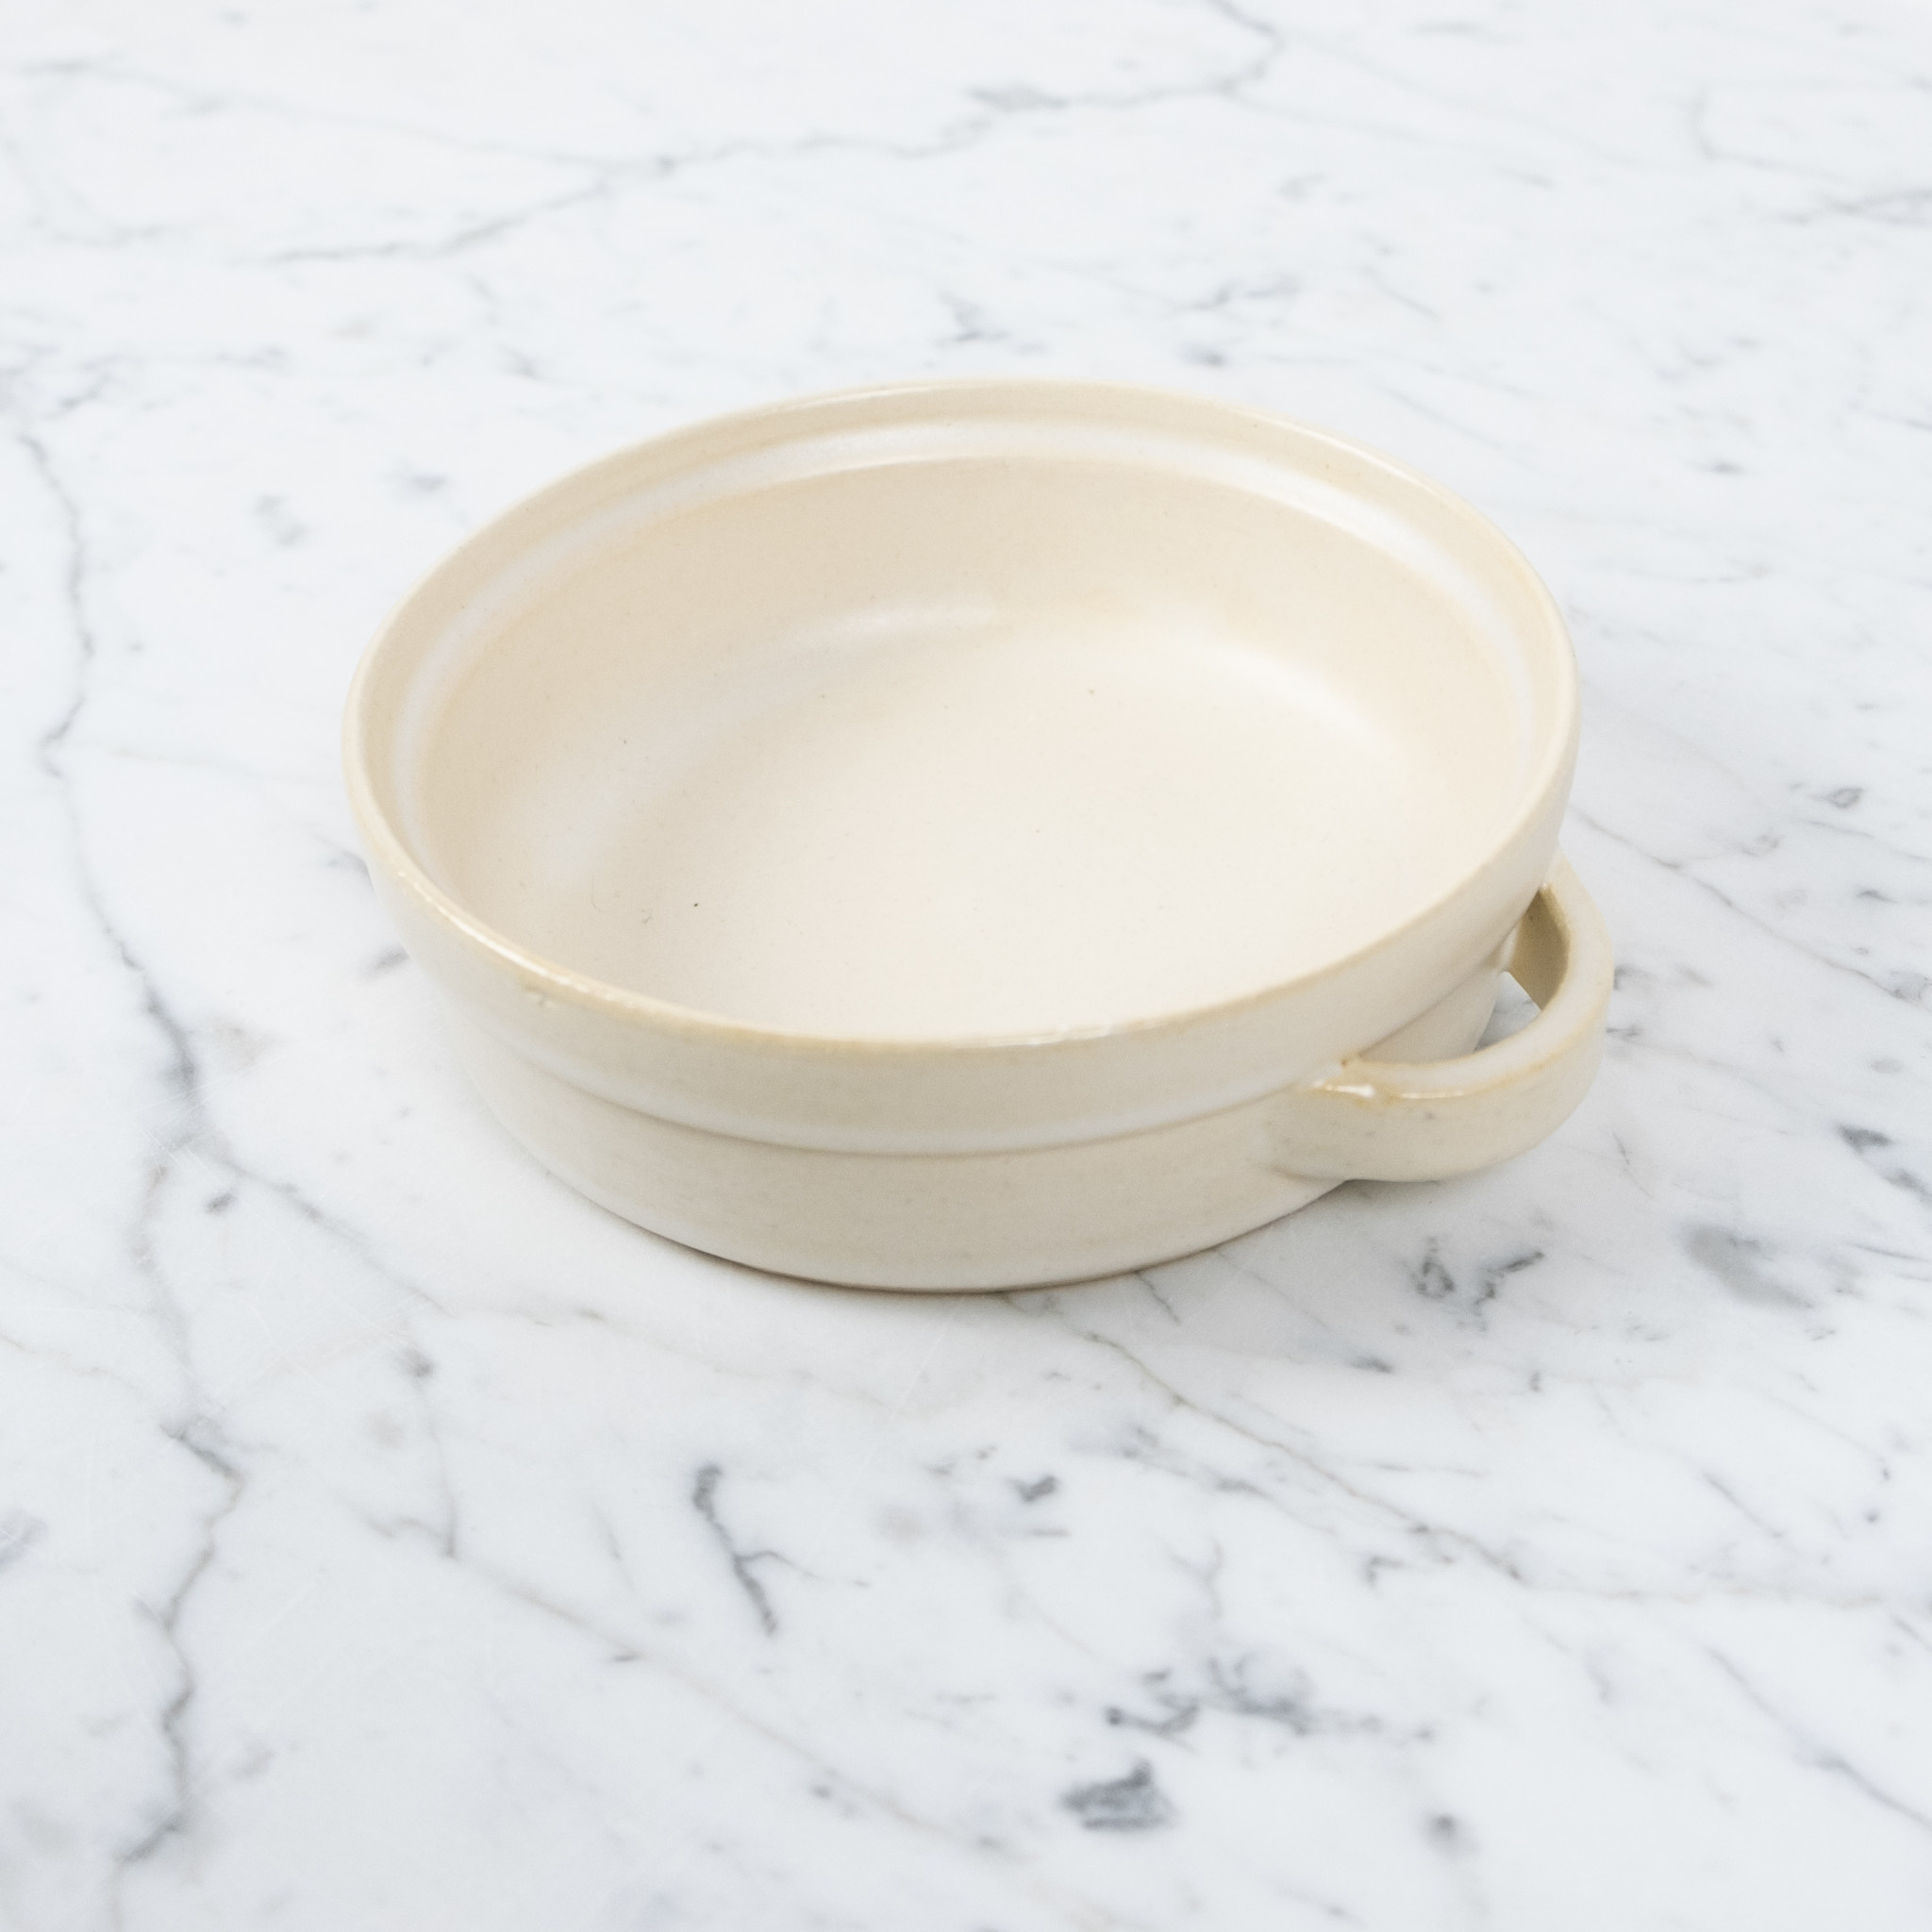 Marumitsu Poterie Japanese Ceramic Gratin Baking Dish - White - Medium - 6"